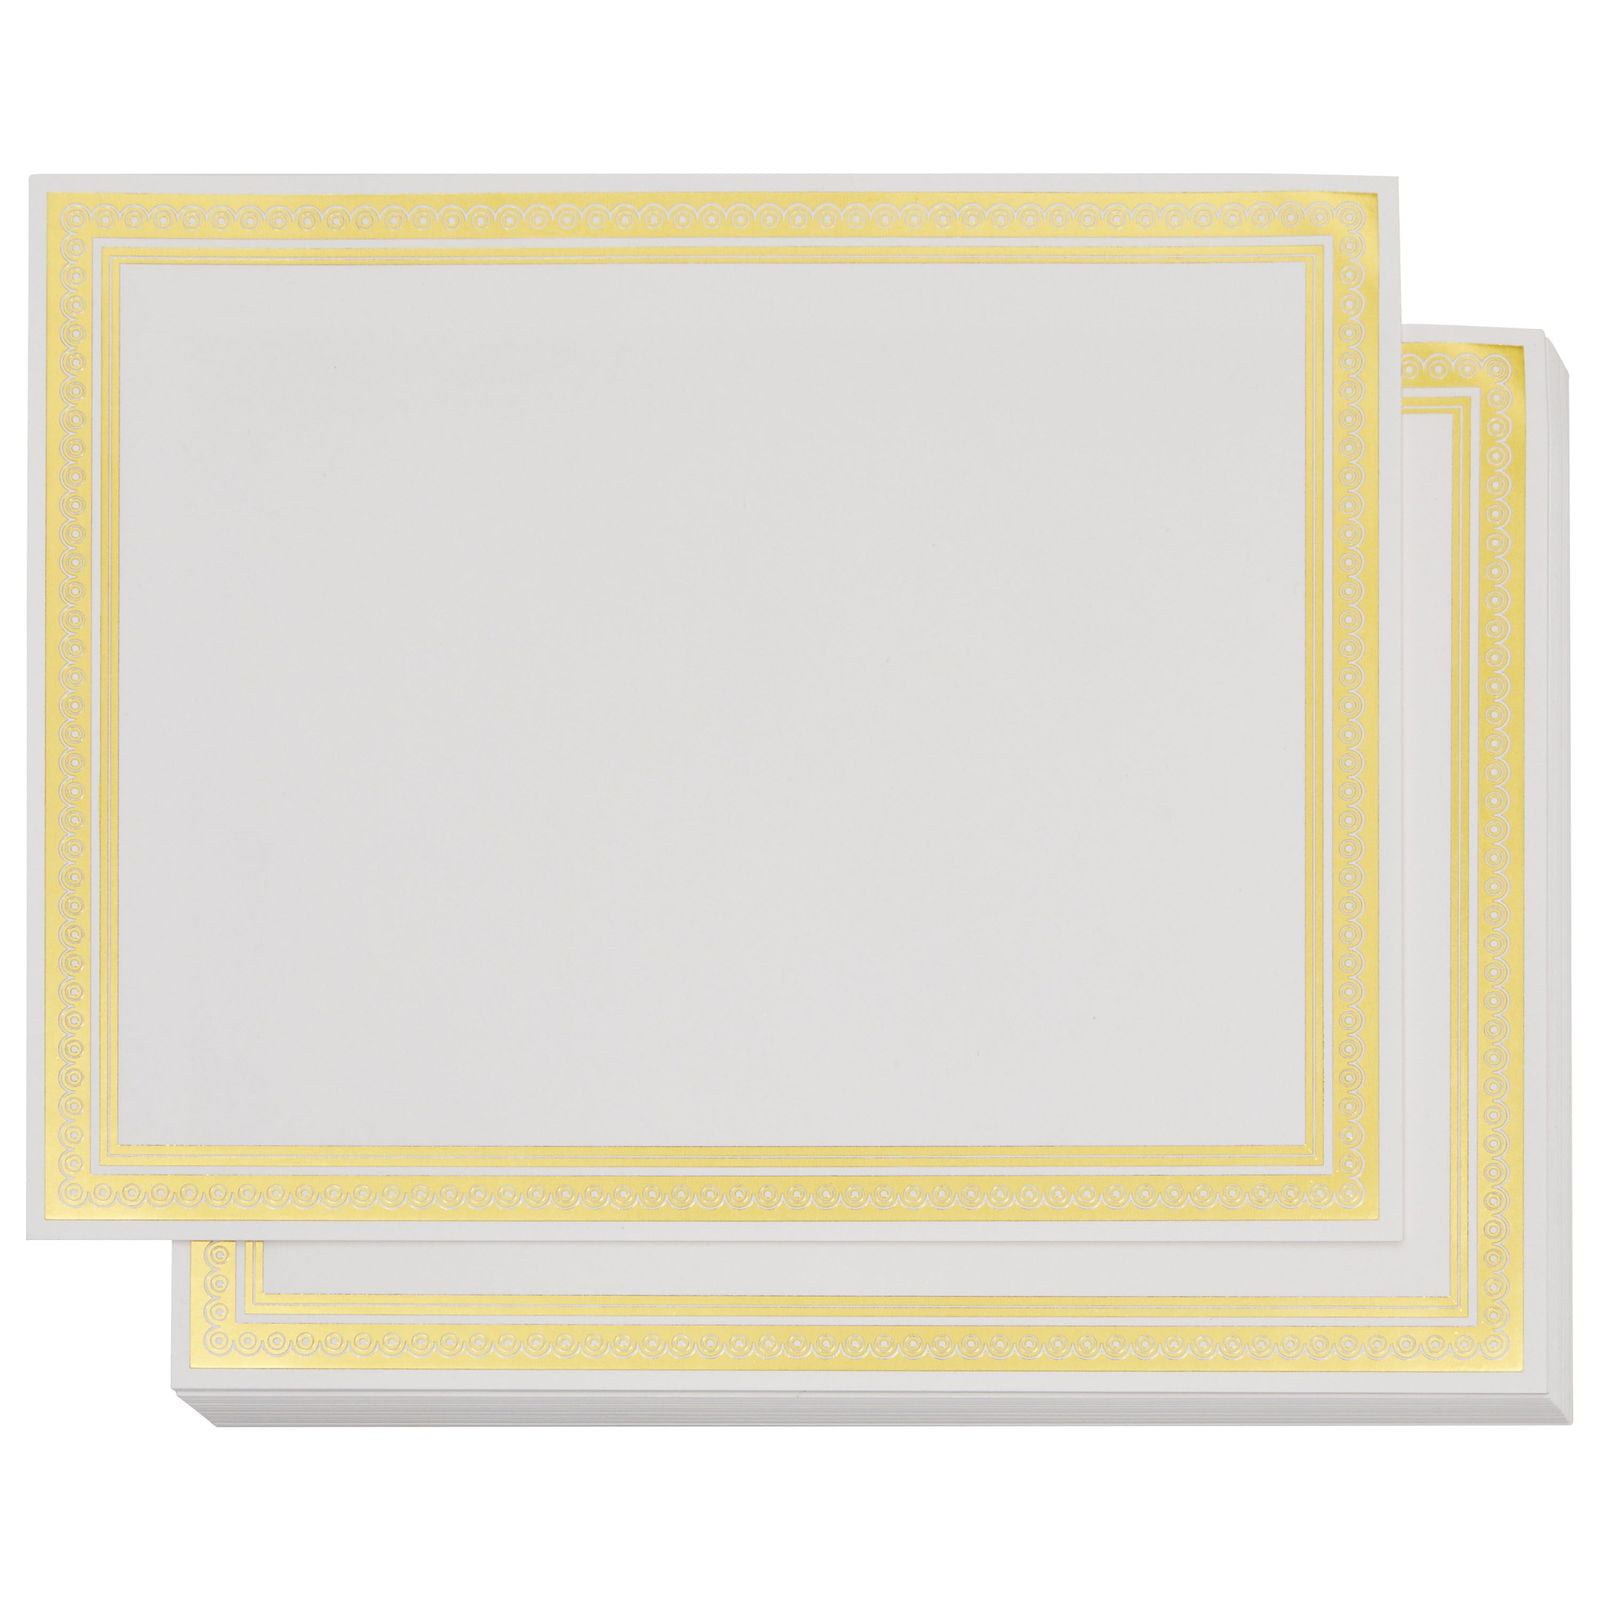 8.5 x 11 Plain Certificate Stock for Printer Black Border Heavyweight Thick Blank Certificate Paper 100 Sheet Pack